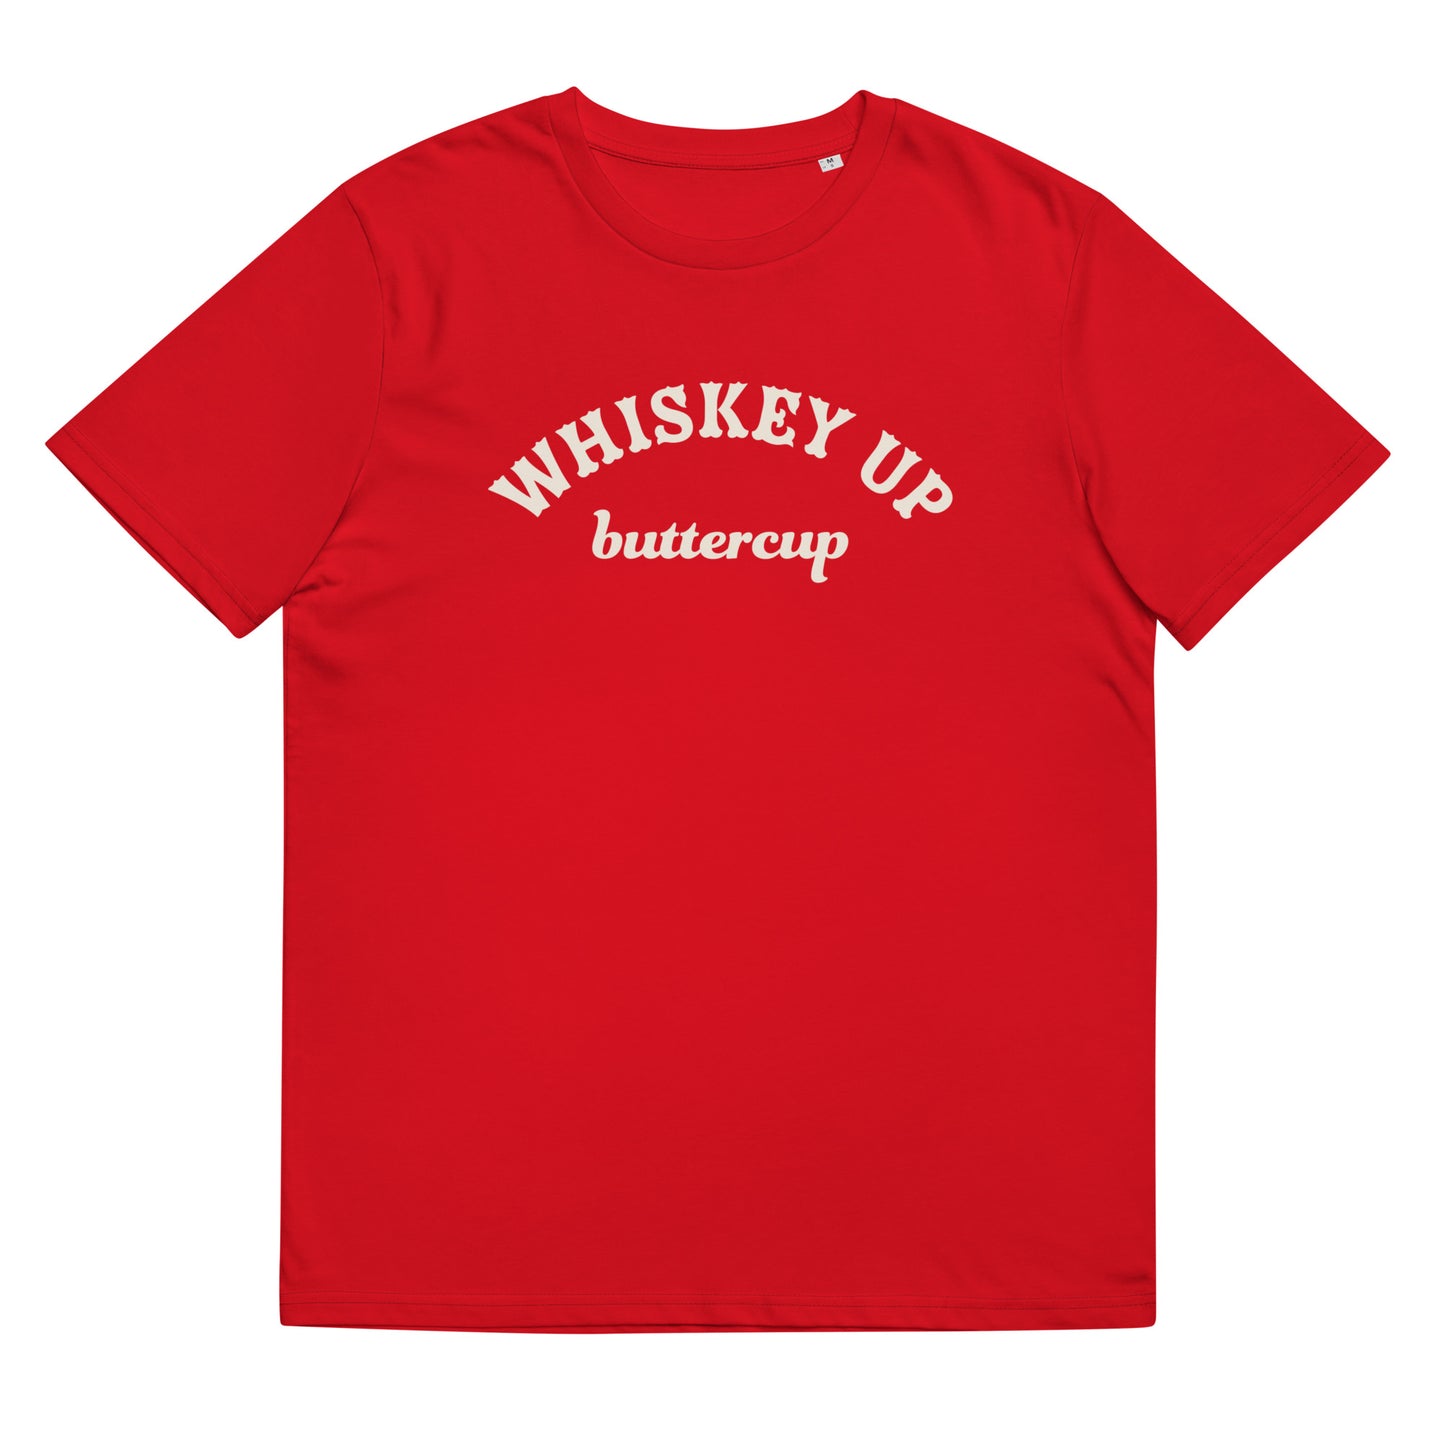 #WhiskeyUpButtercup - Gender Neutral Organic Cotton T-shirt